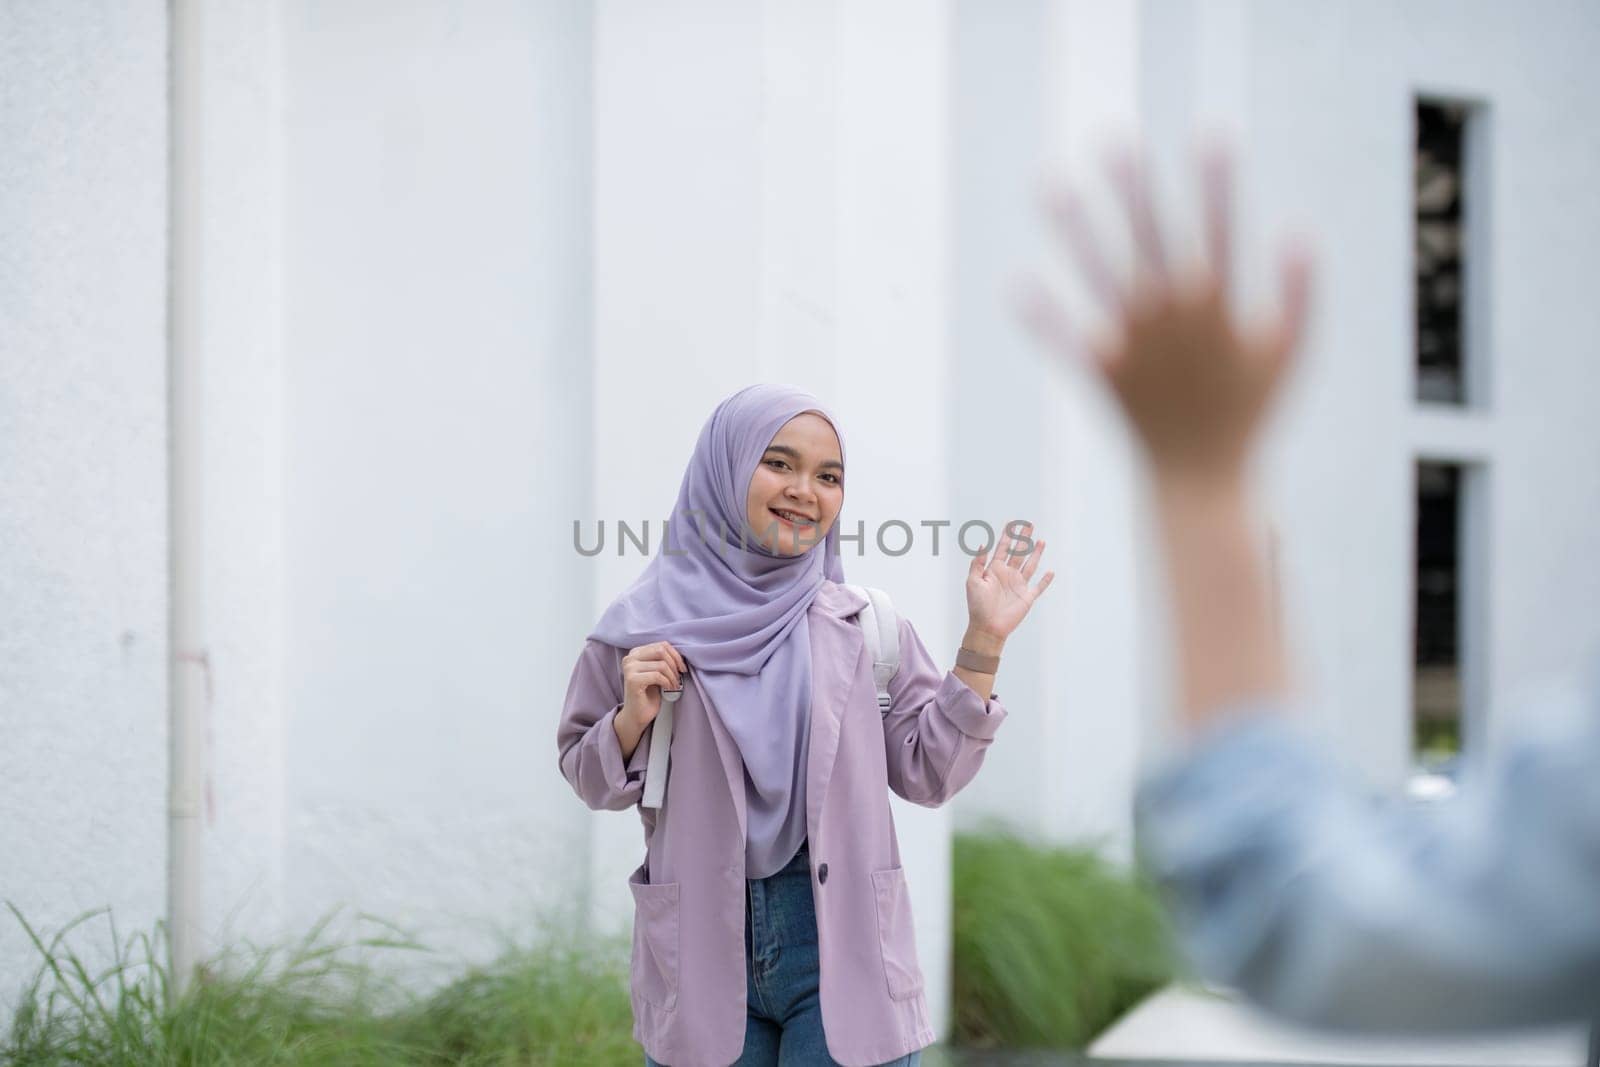 Beautiful Muslim college student girl waving to greet a friend at university.